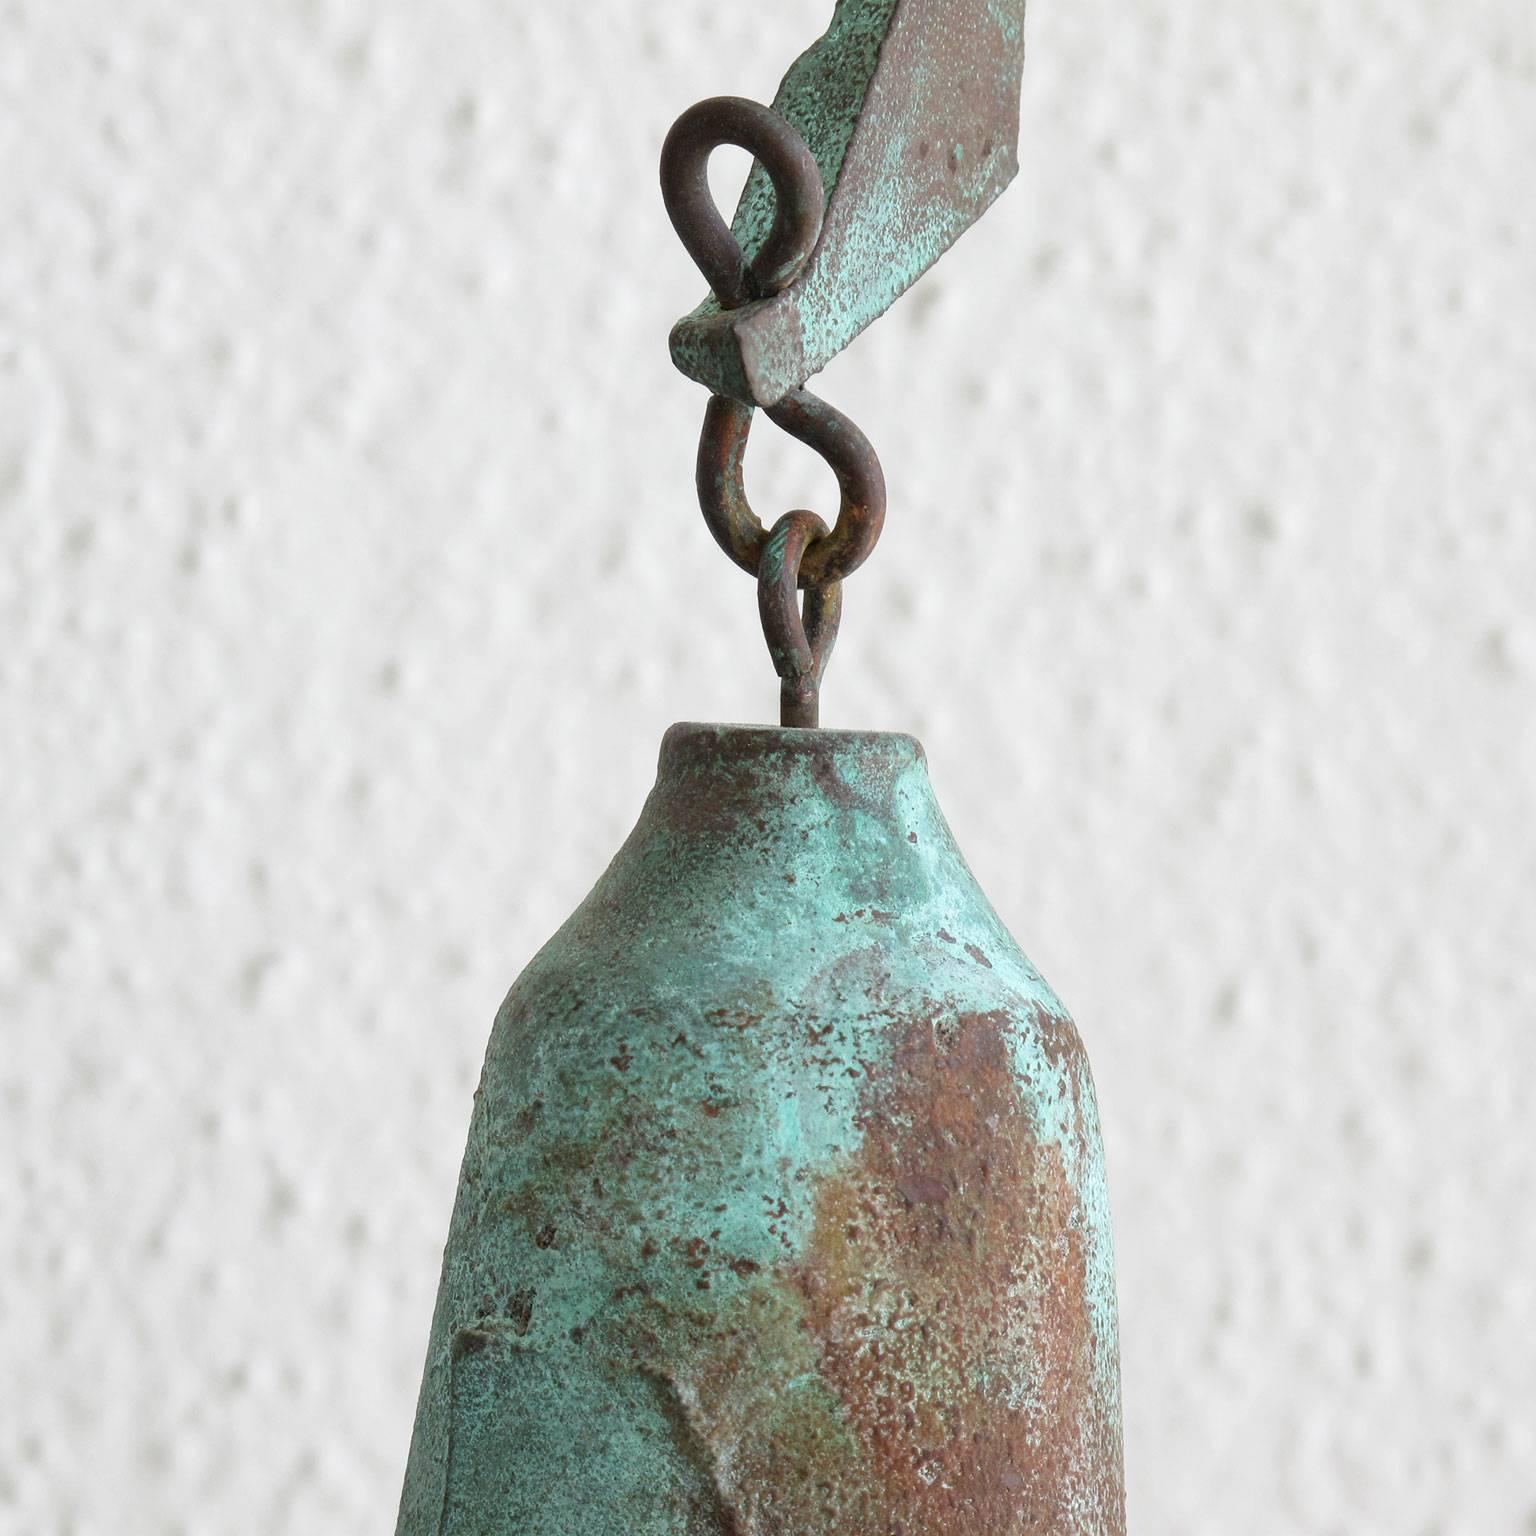 Paolo Soleri Bronze Wind Chime Bell, 1970s Vintage Brutalist Modern For Sale 2